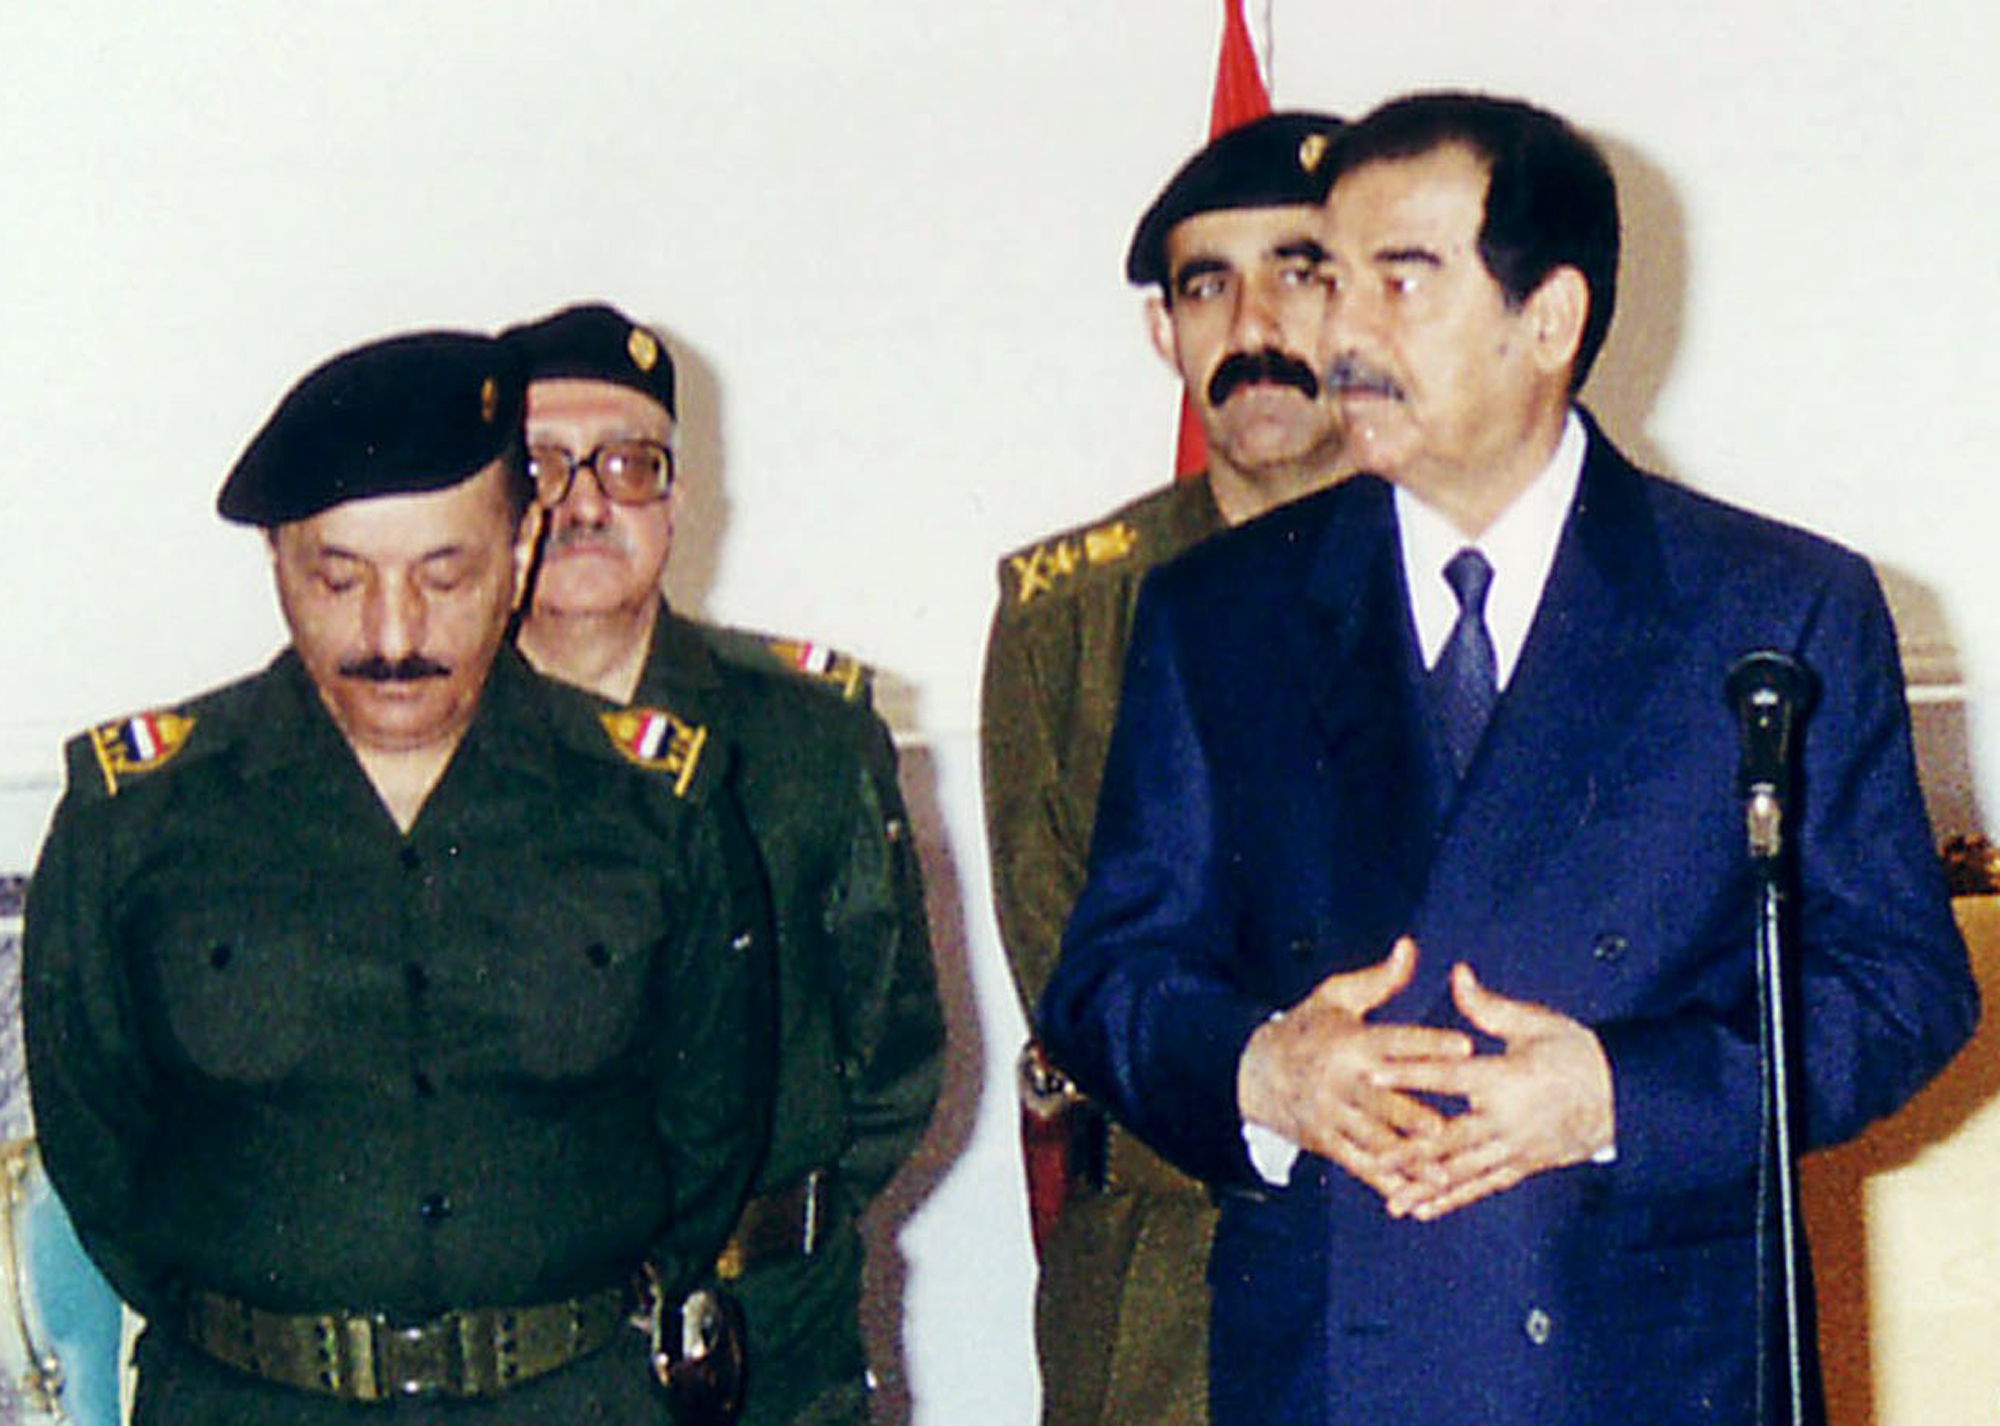 Vladimir Putin and Saddam Hussein case study Do tyrants heed their minions?